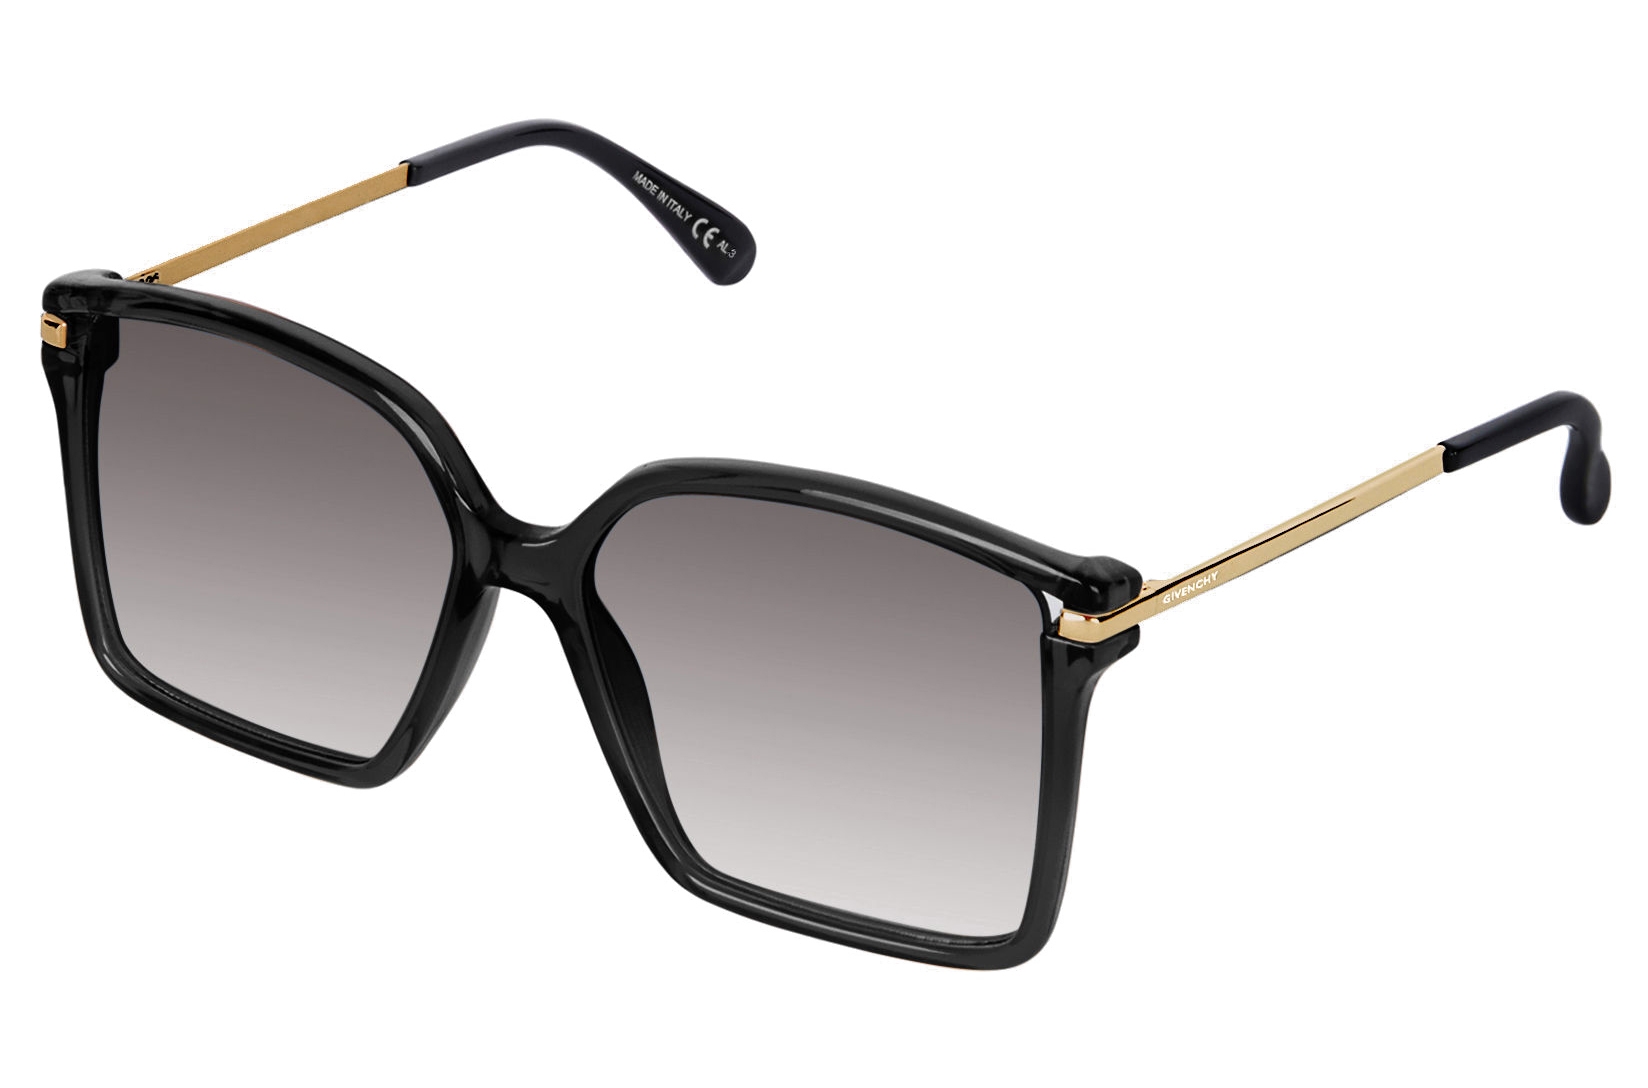 Givenchy - Sunglasses Square GV Light - Black - Sunglasses - Givenchy  Eyewear - Avvenice